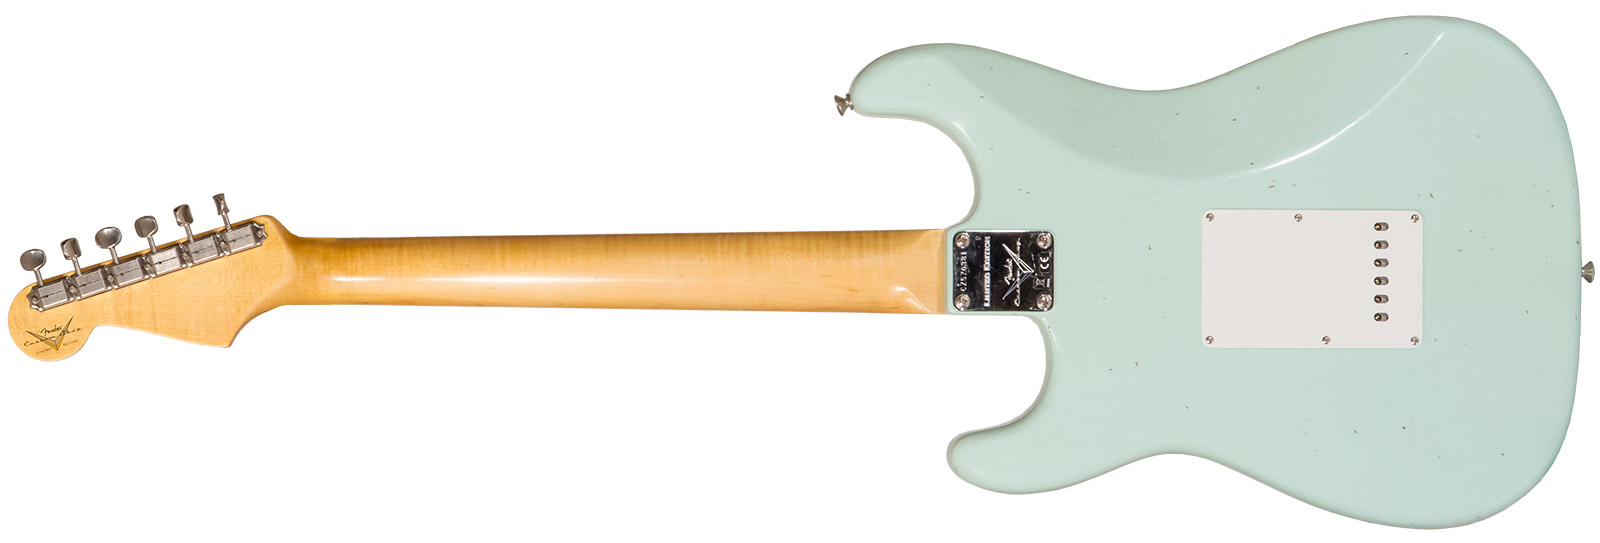 Fender Custom Shop Strat 1964 3s Trem Rw #cz570381 - Journeyman Relic Aged Surf Green - Str shape electric guitar - Variation 1